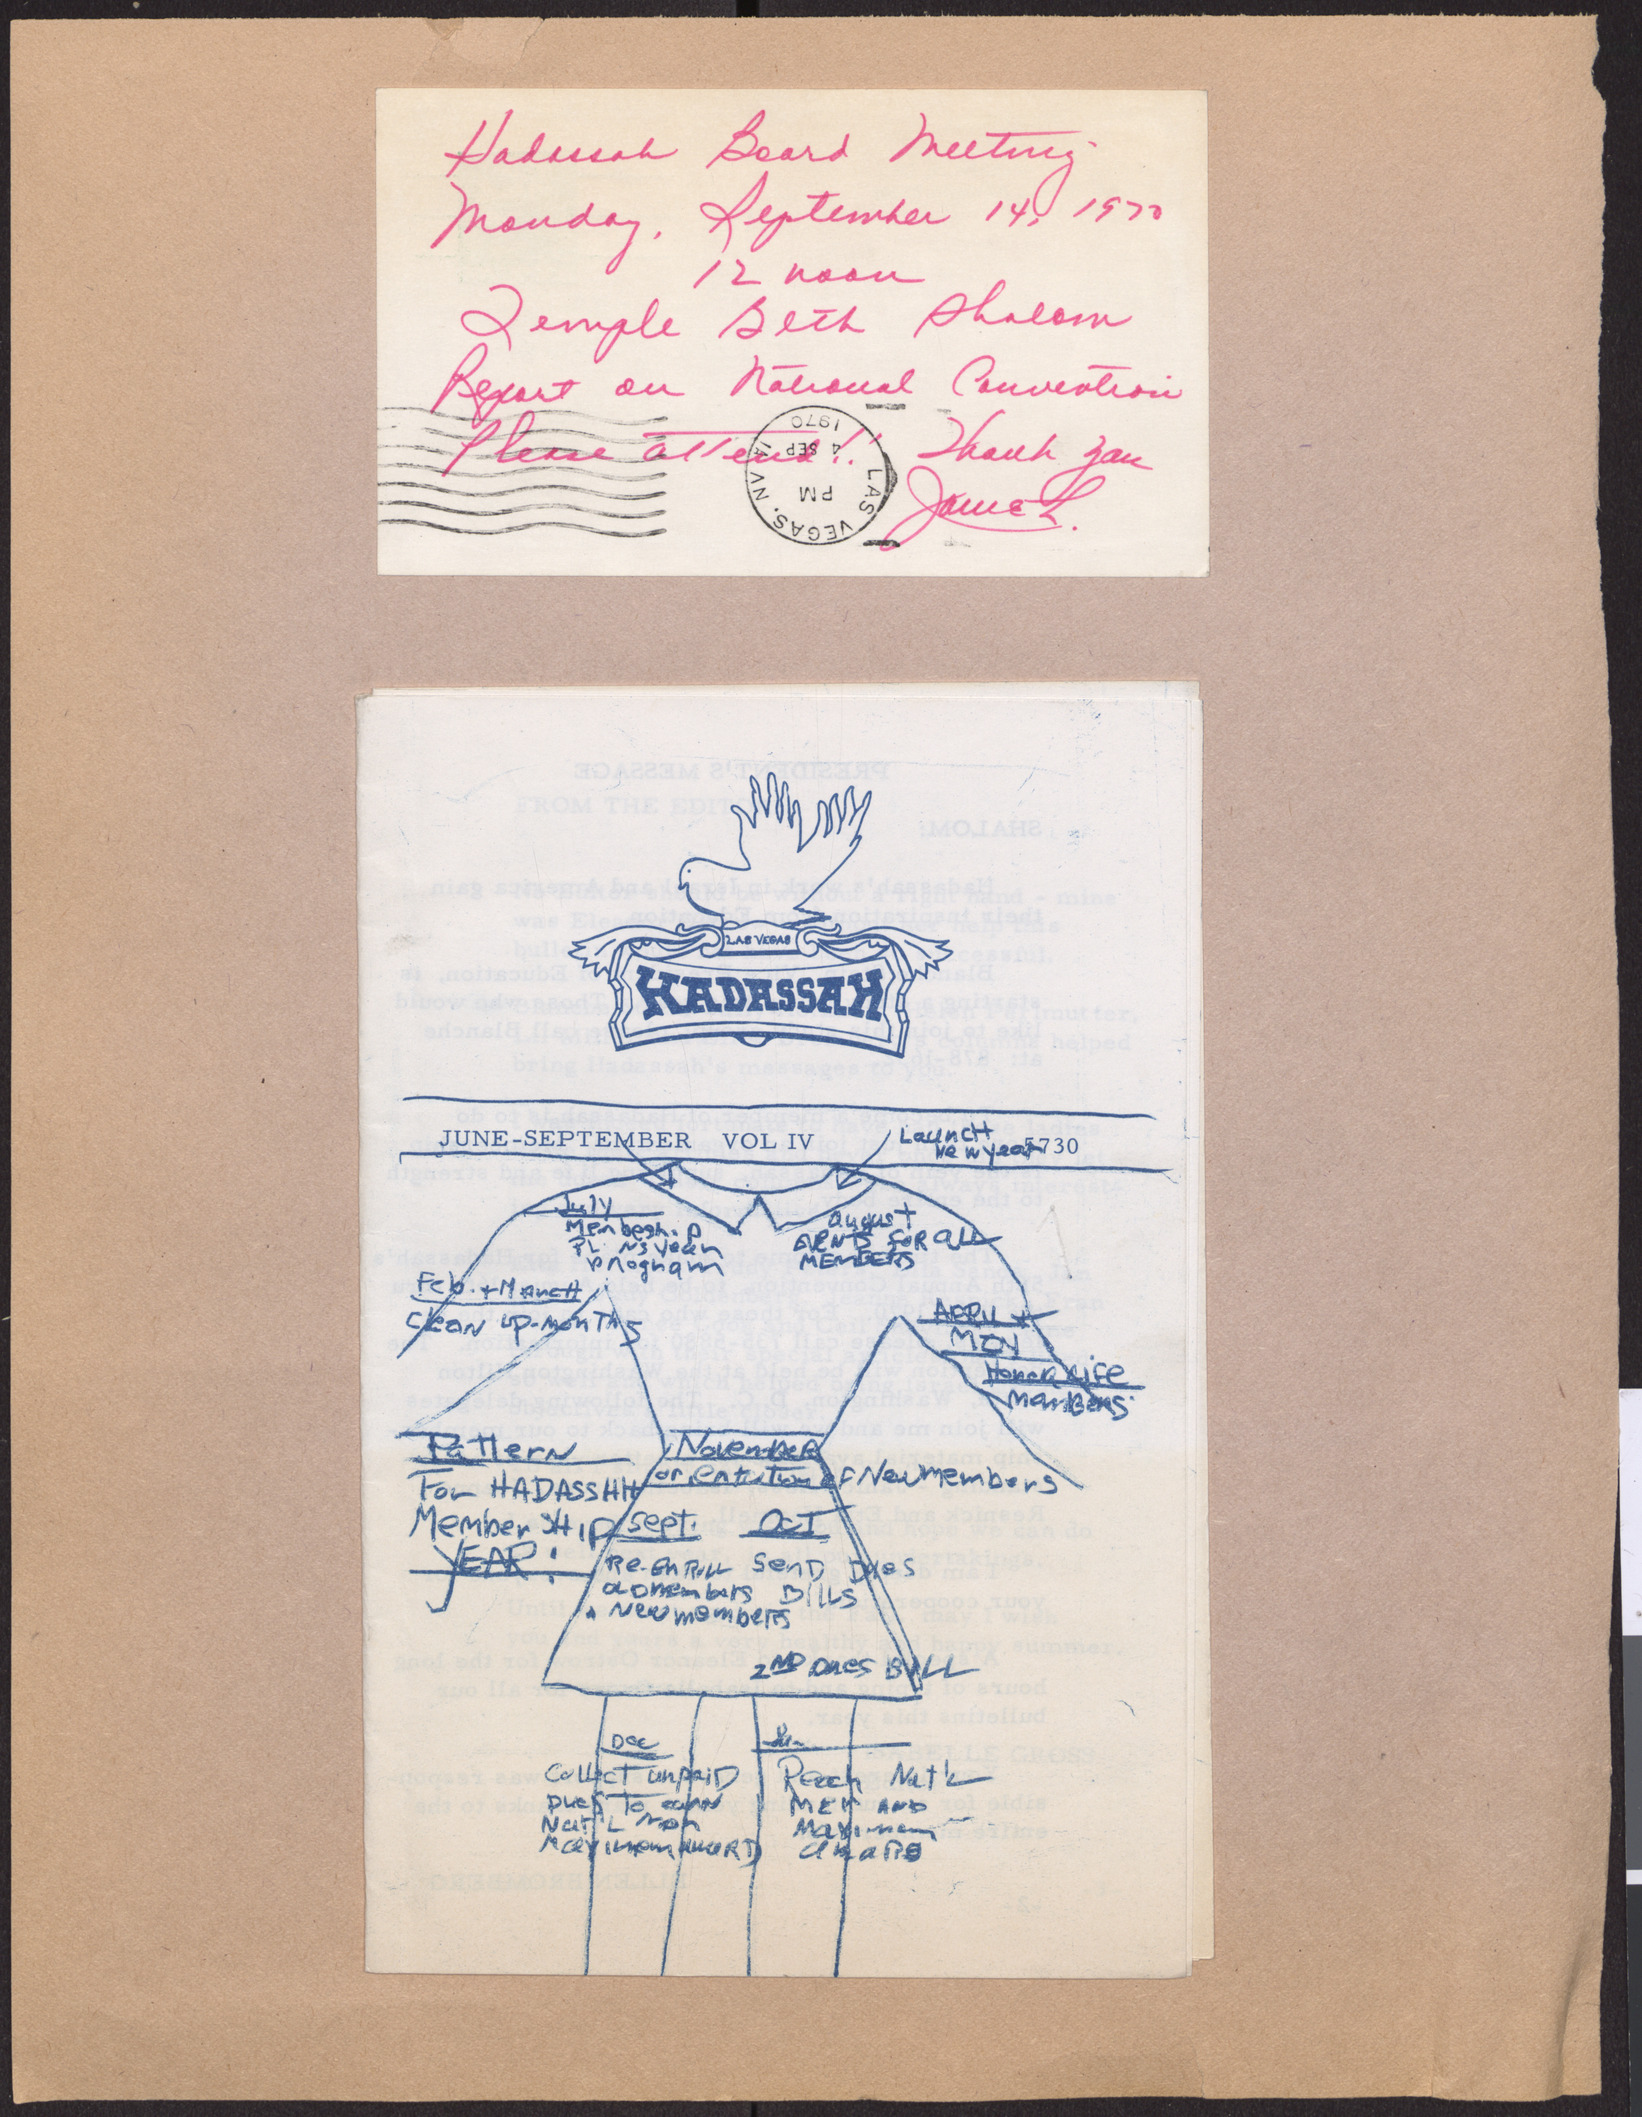 Invitation card to Hadassah board meeting, September 14, 1970, and Hadassah bulletin, June-September 1970